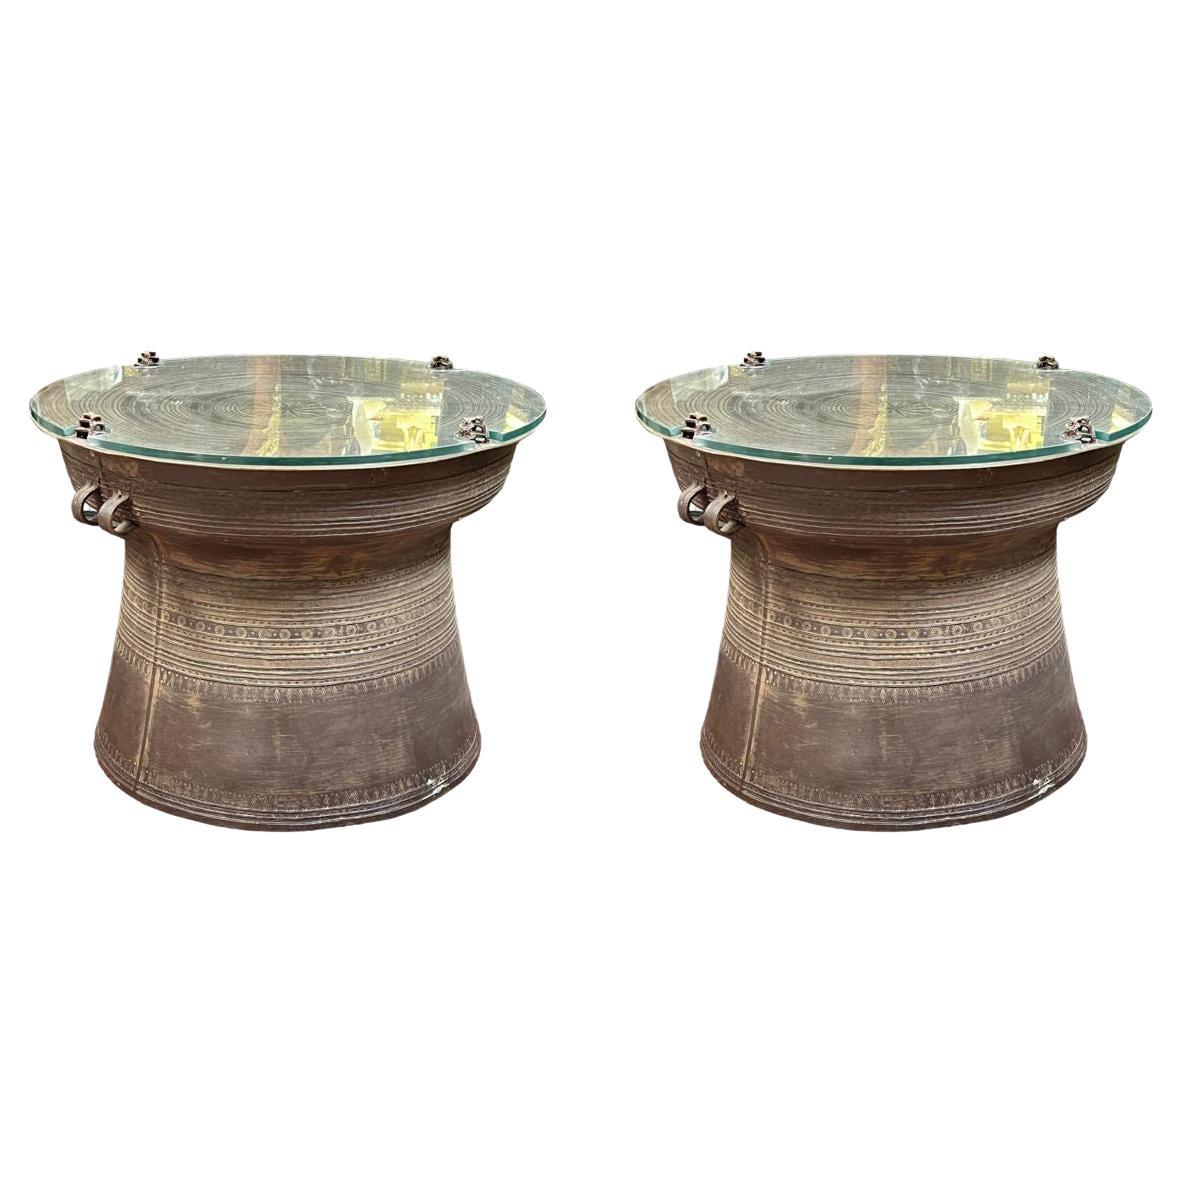 Pair Antique Southeast Asian Bronze Rain Drum Tables with Glass Tops